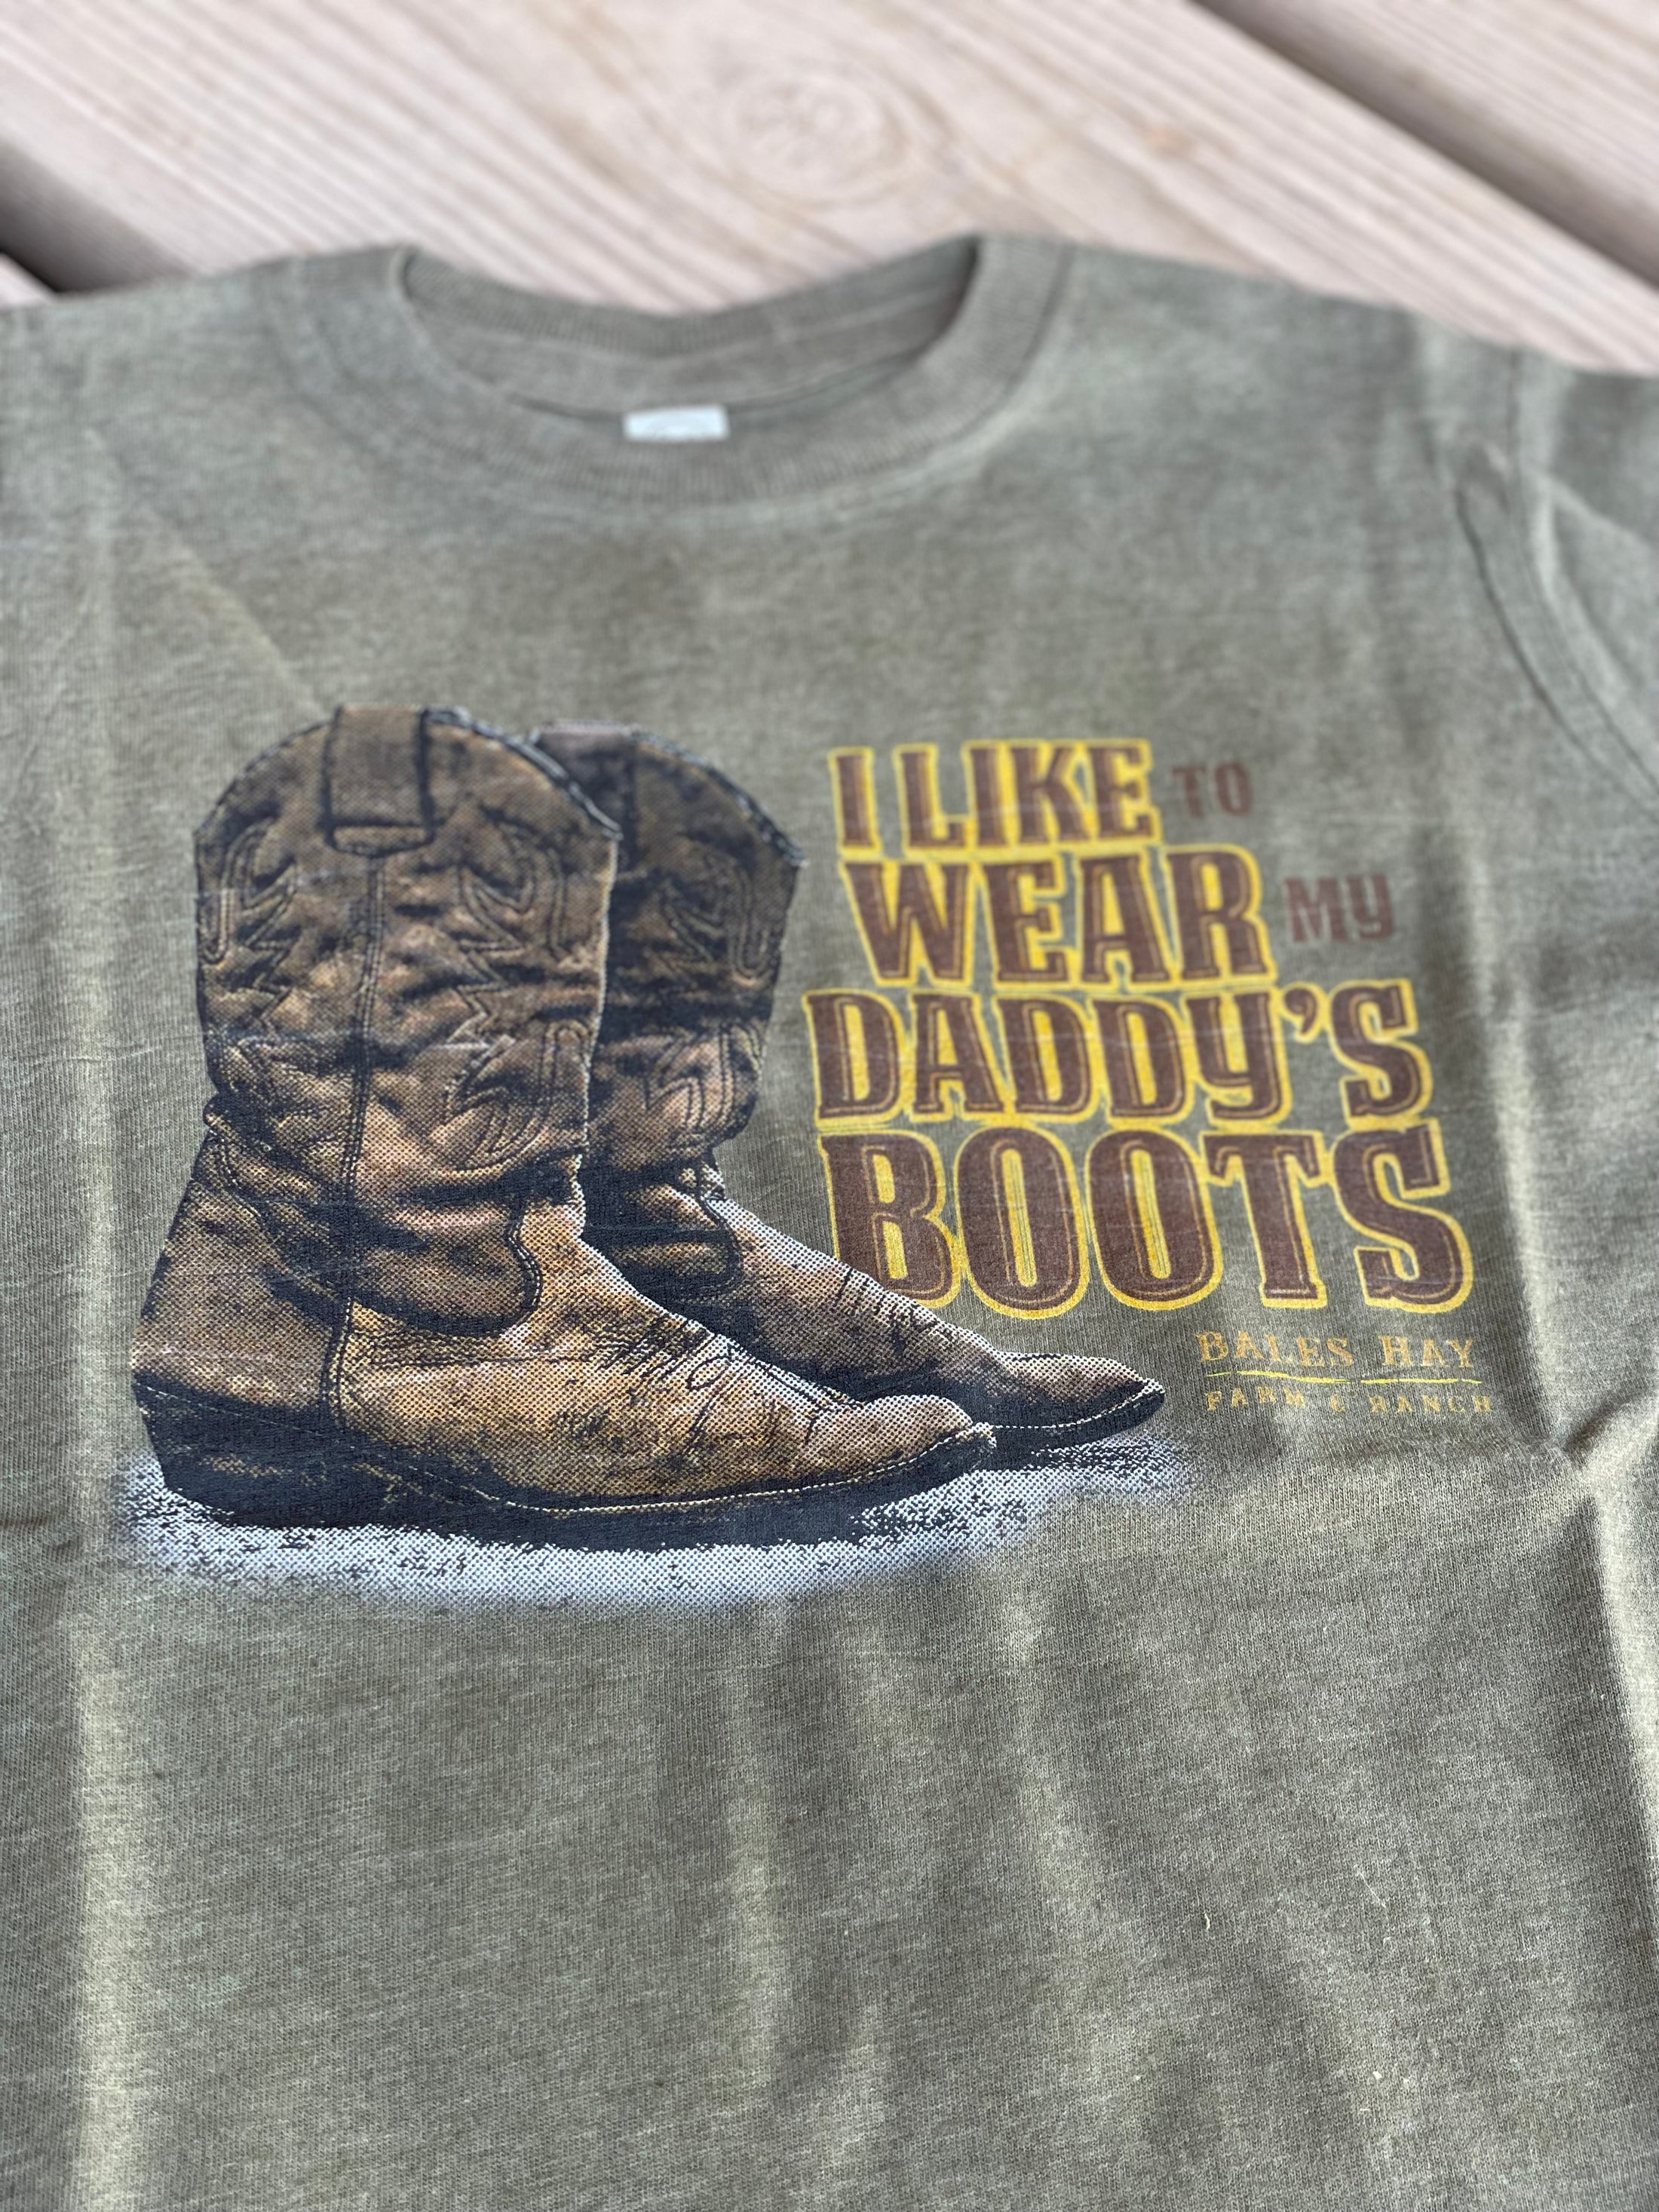 Kids "I Like to Wear My Daddy's Boots" Tee